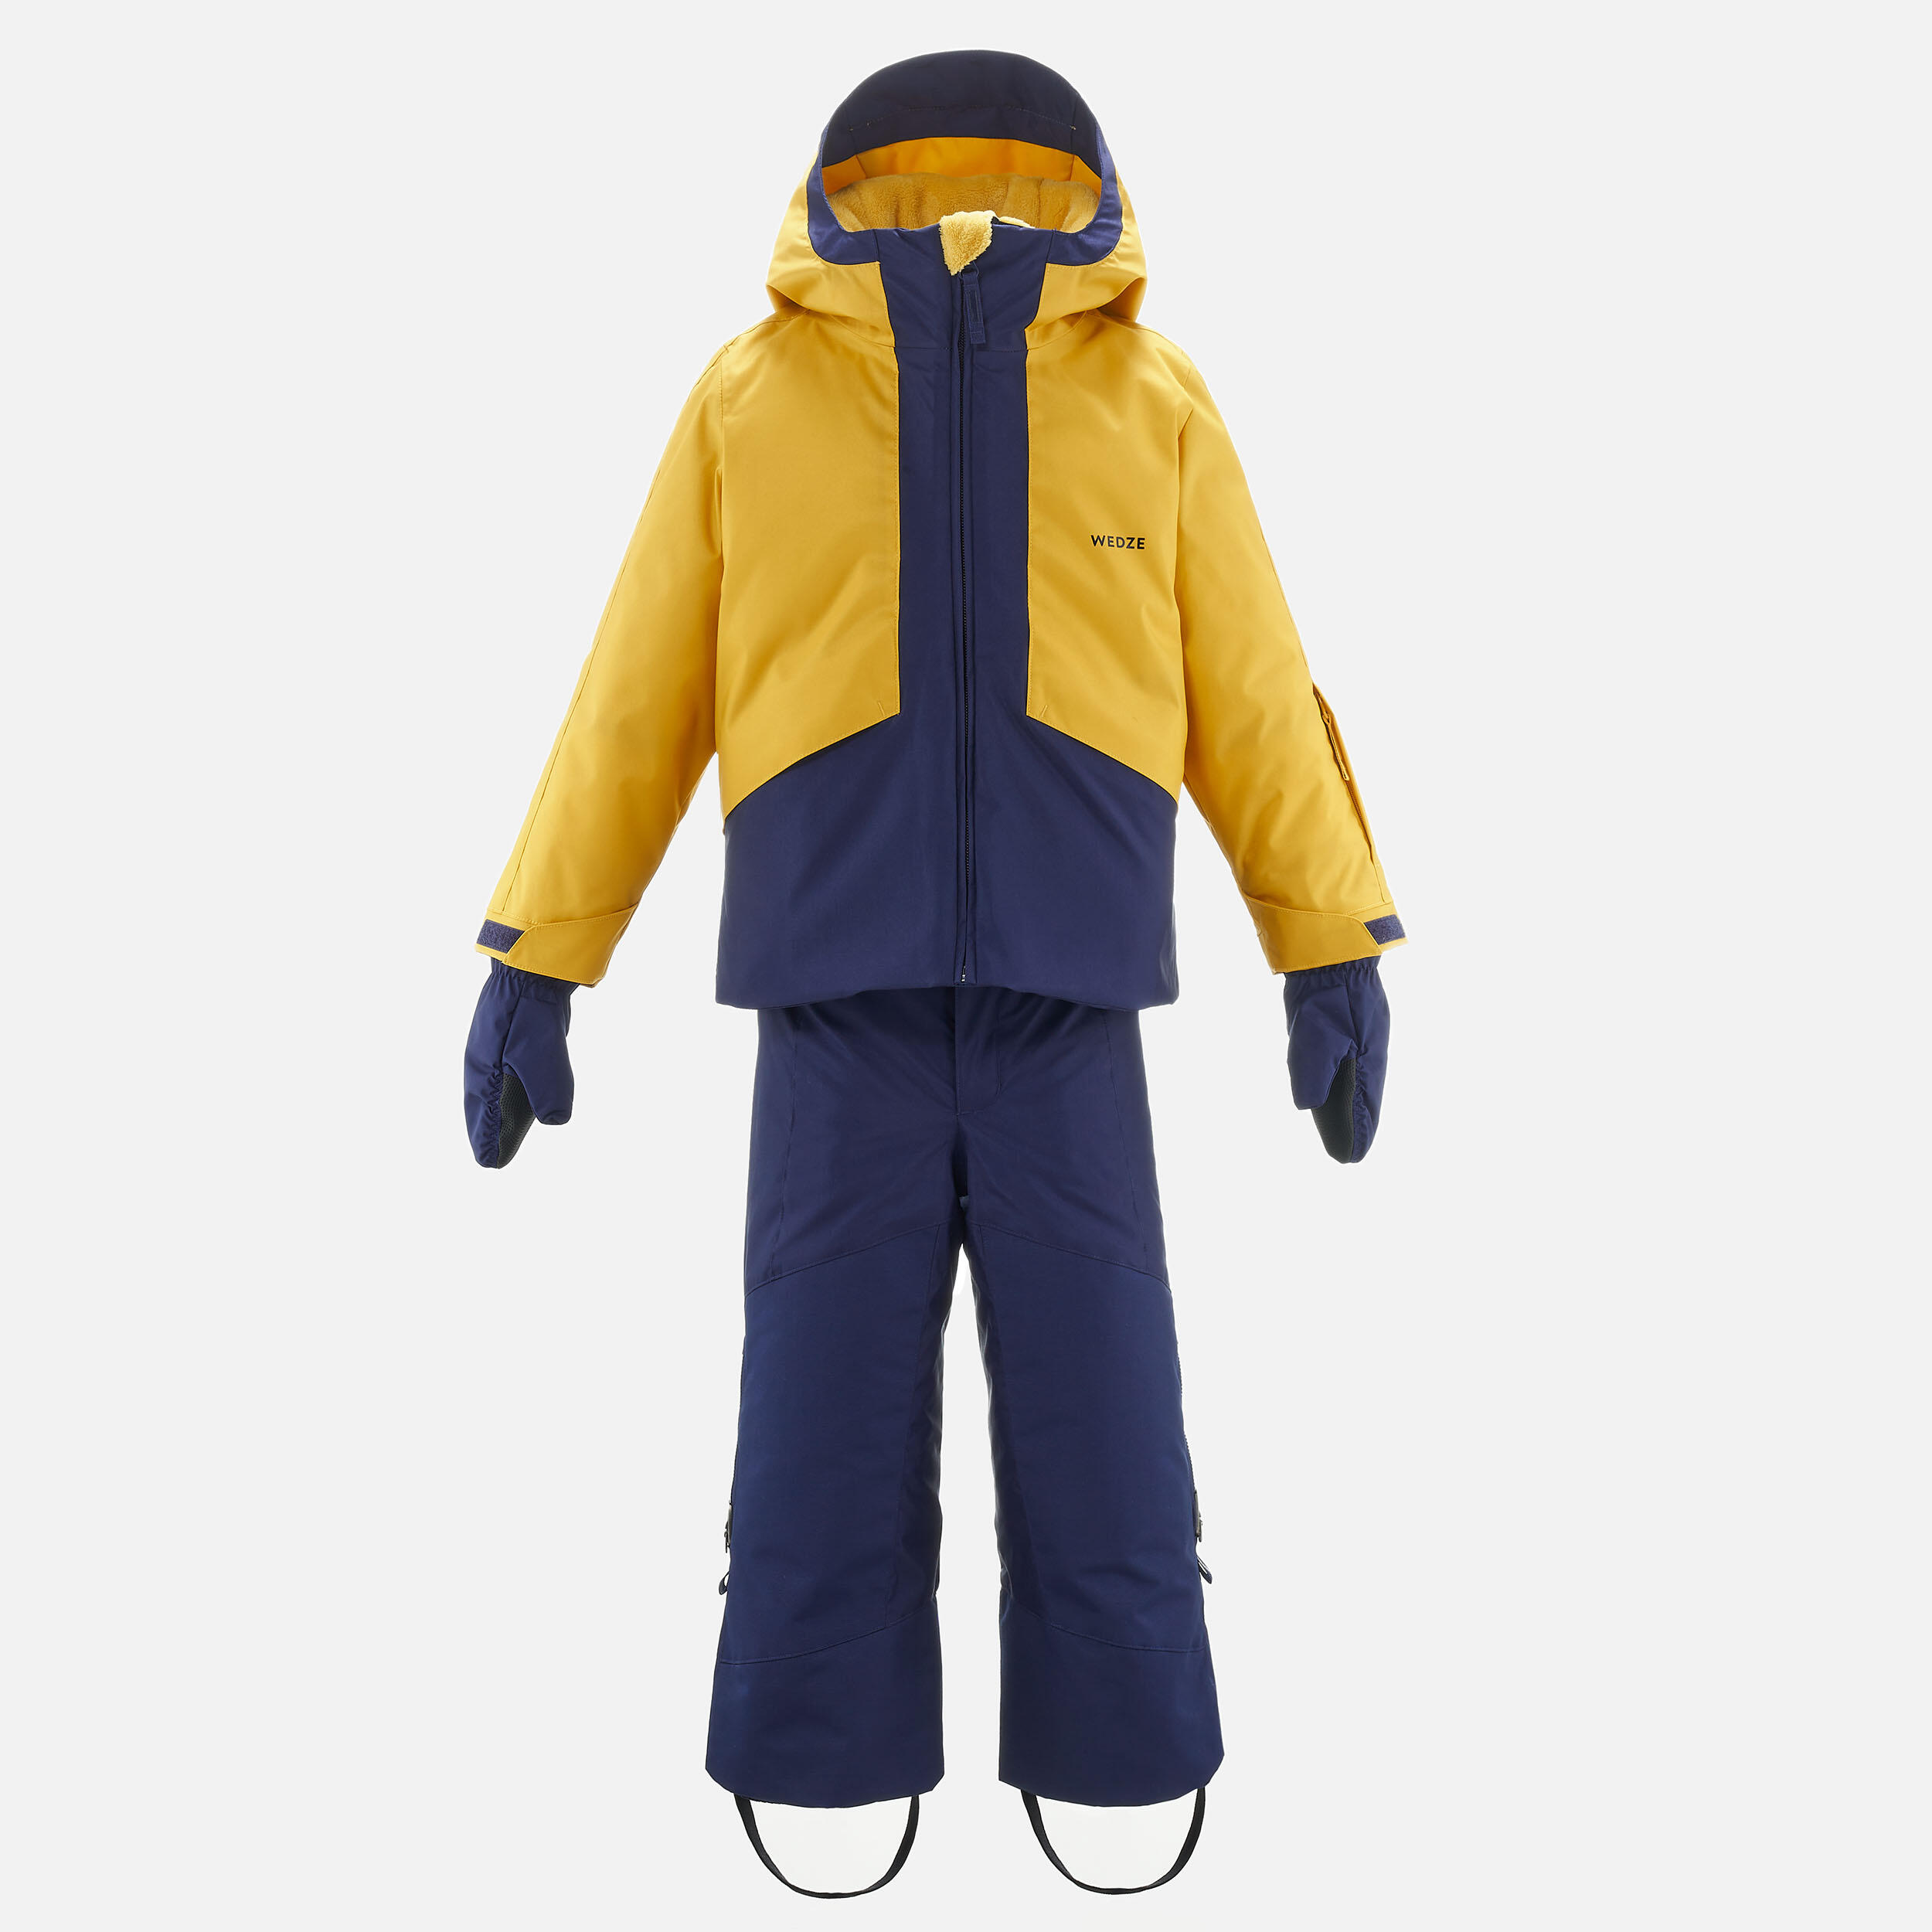 Kids' Snowsuit - 580 Yellow/Blue - Galaxy blue, Honey, Bright tomato - Wedze  - Decathlon